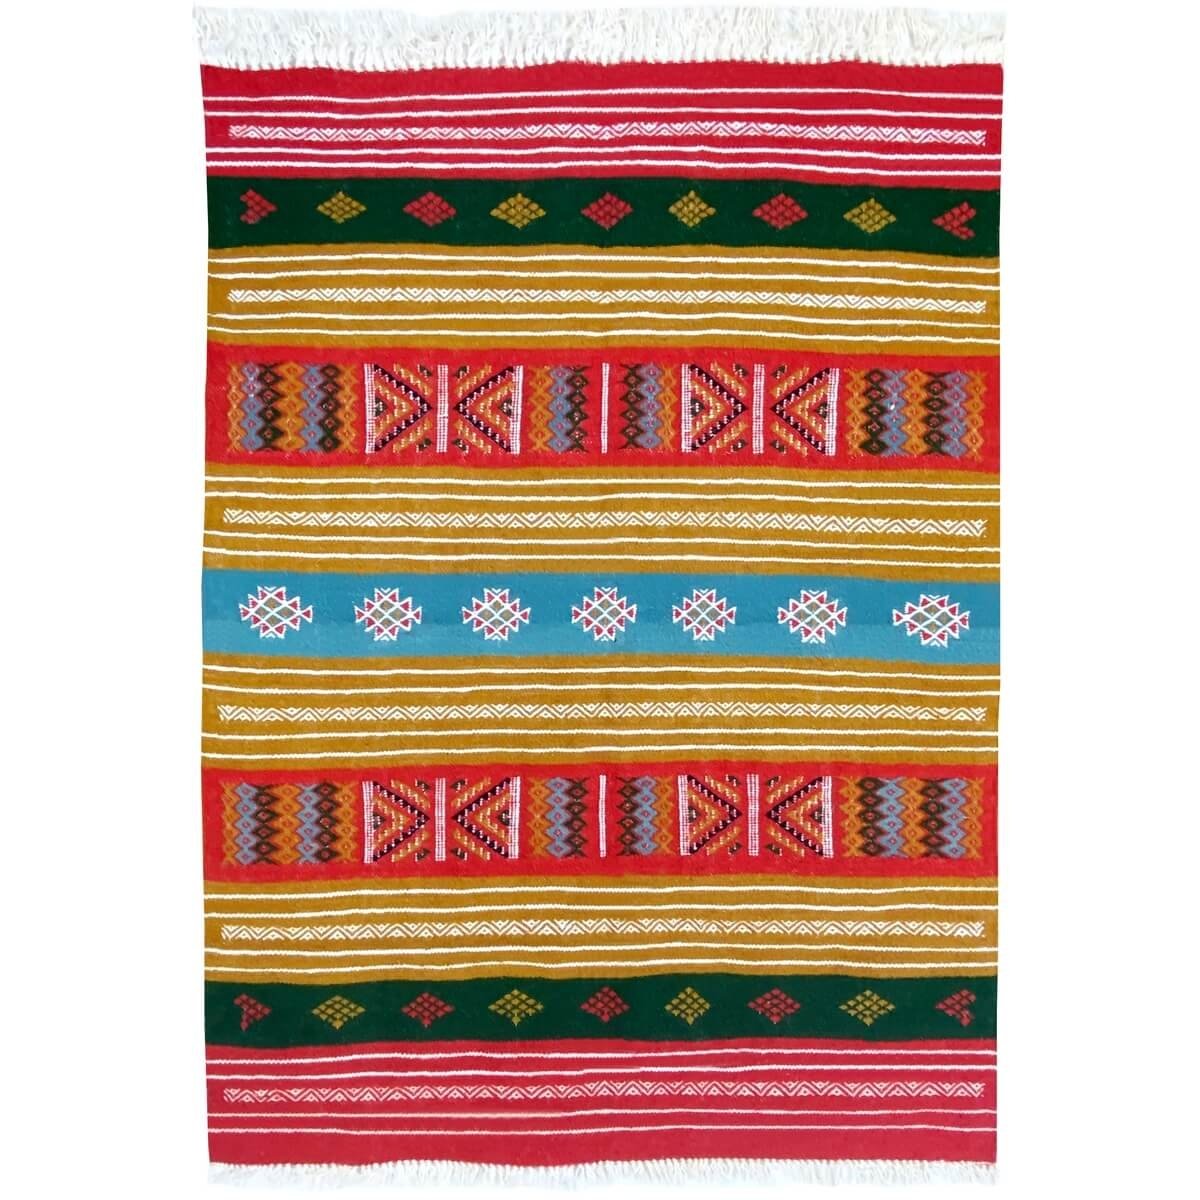 Tapete berbere Tapete Kilim Bela 100x140 Multicor (Tecidos à mão, Lã) Tapete tunisiano kilim, estilo marroquino. Tapete retangul